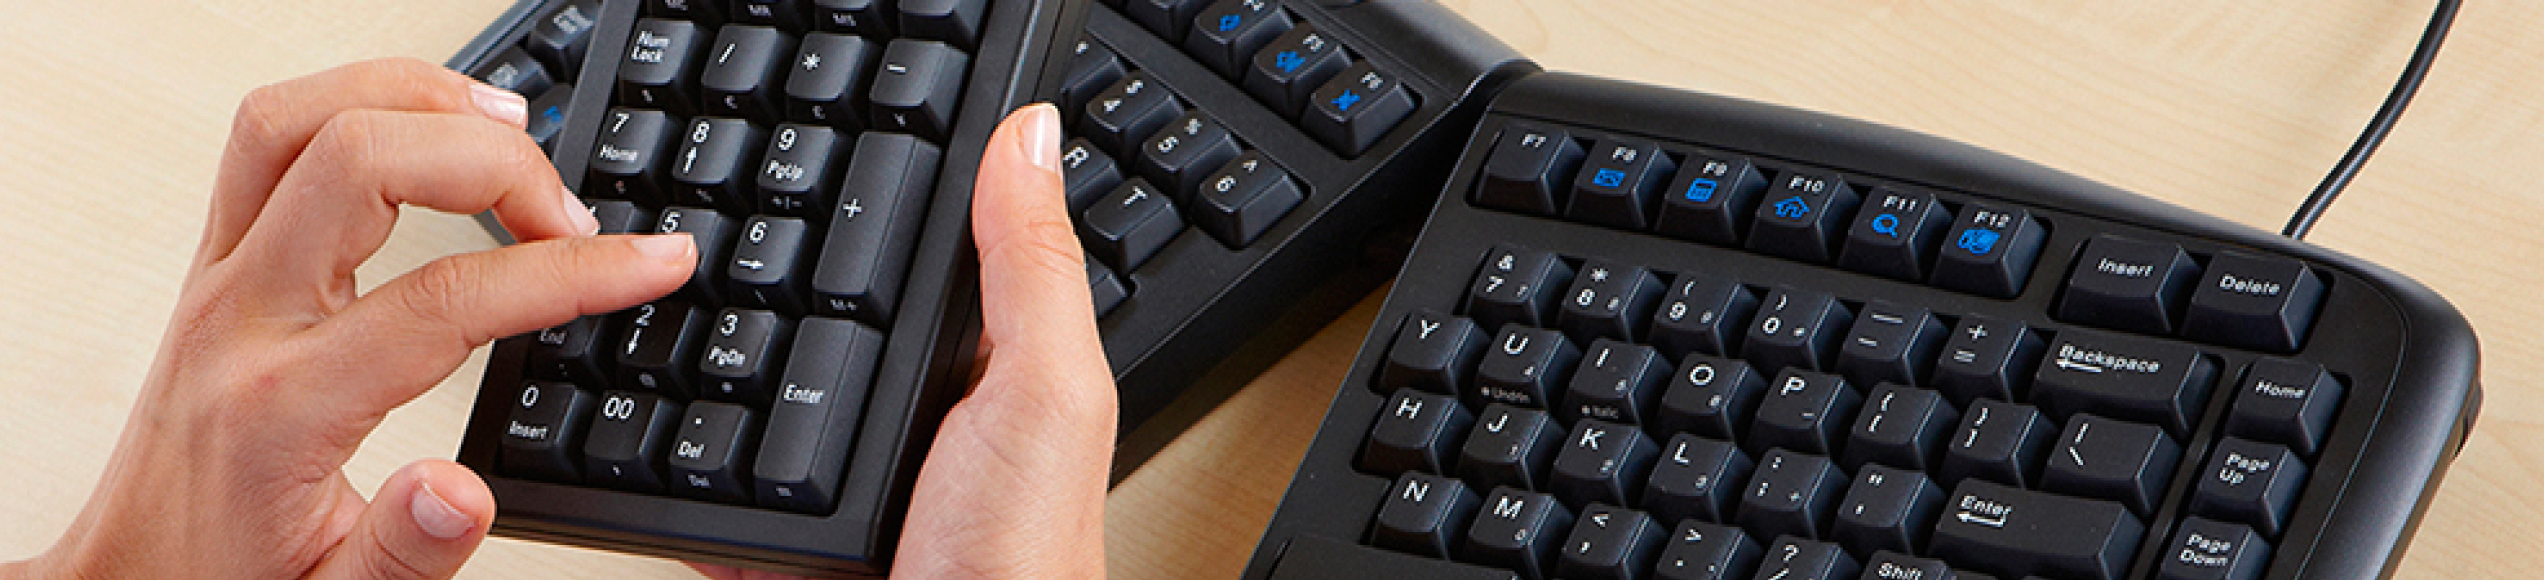 Image showing the Goldtouch V2 Adjustable Comfort Keyboard from Postruite